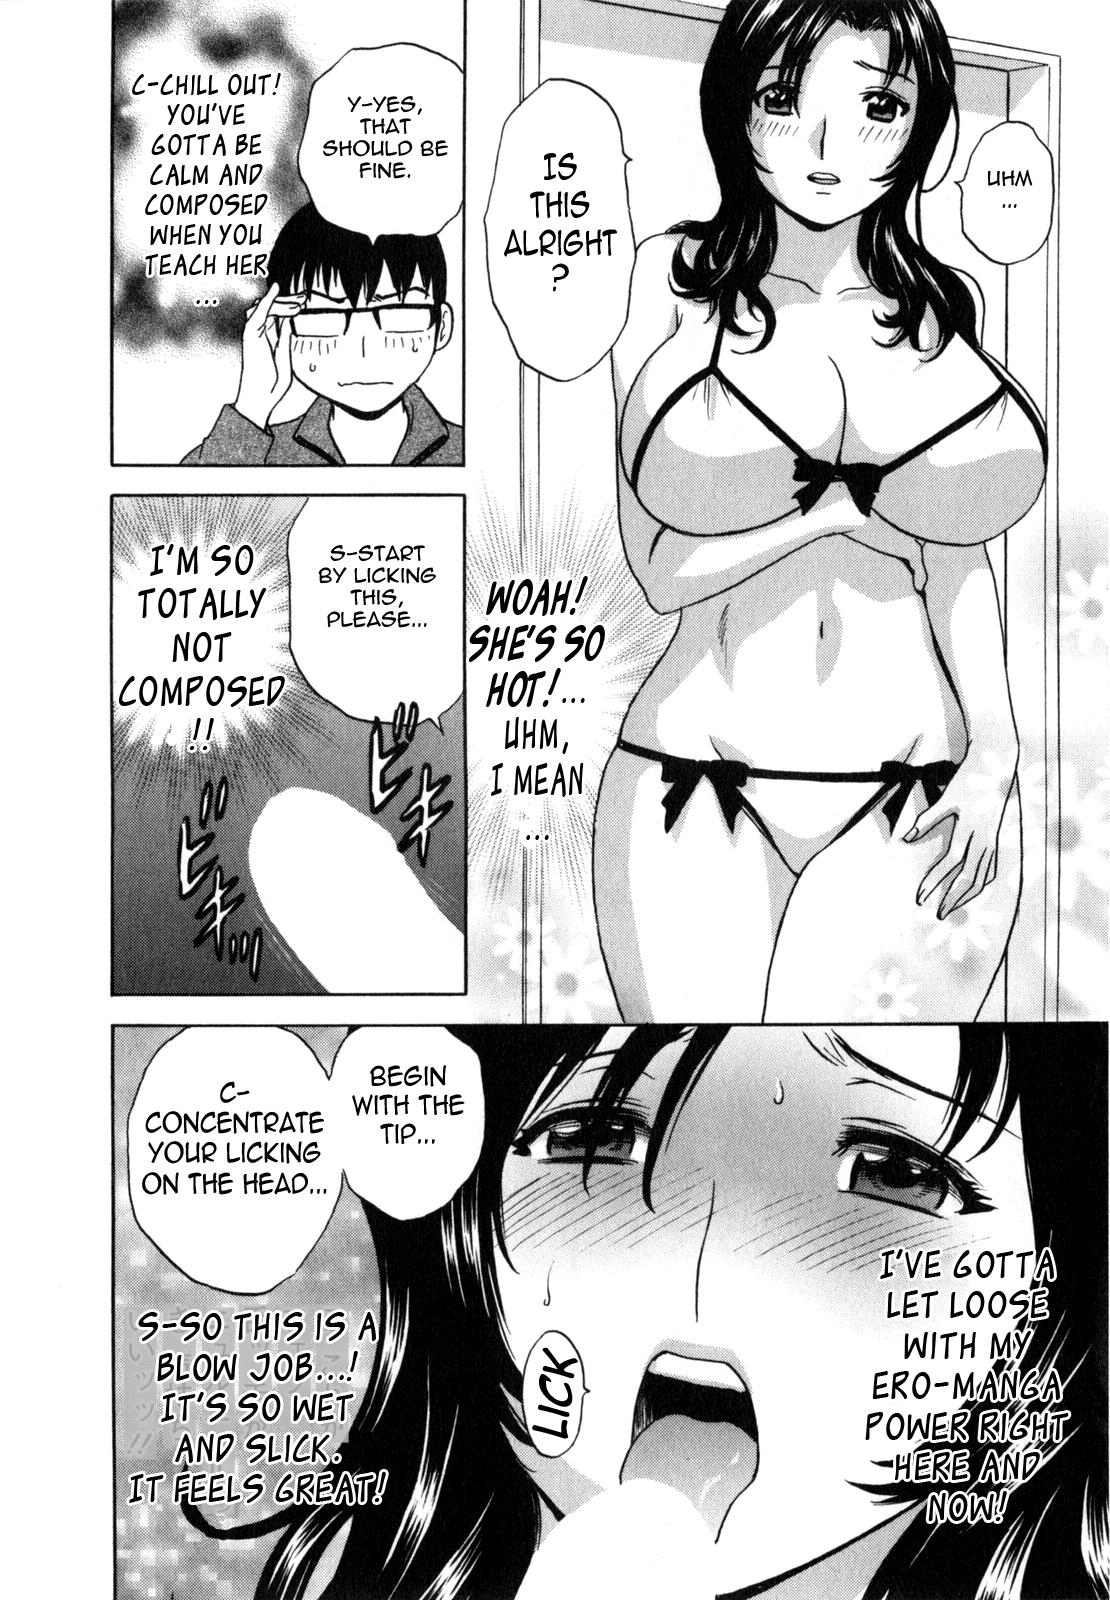 [Hidemaru] Life with Married Women Just Like a Manga 1 - Ch. 1-7 [English] {Tadanohito} 16